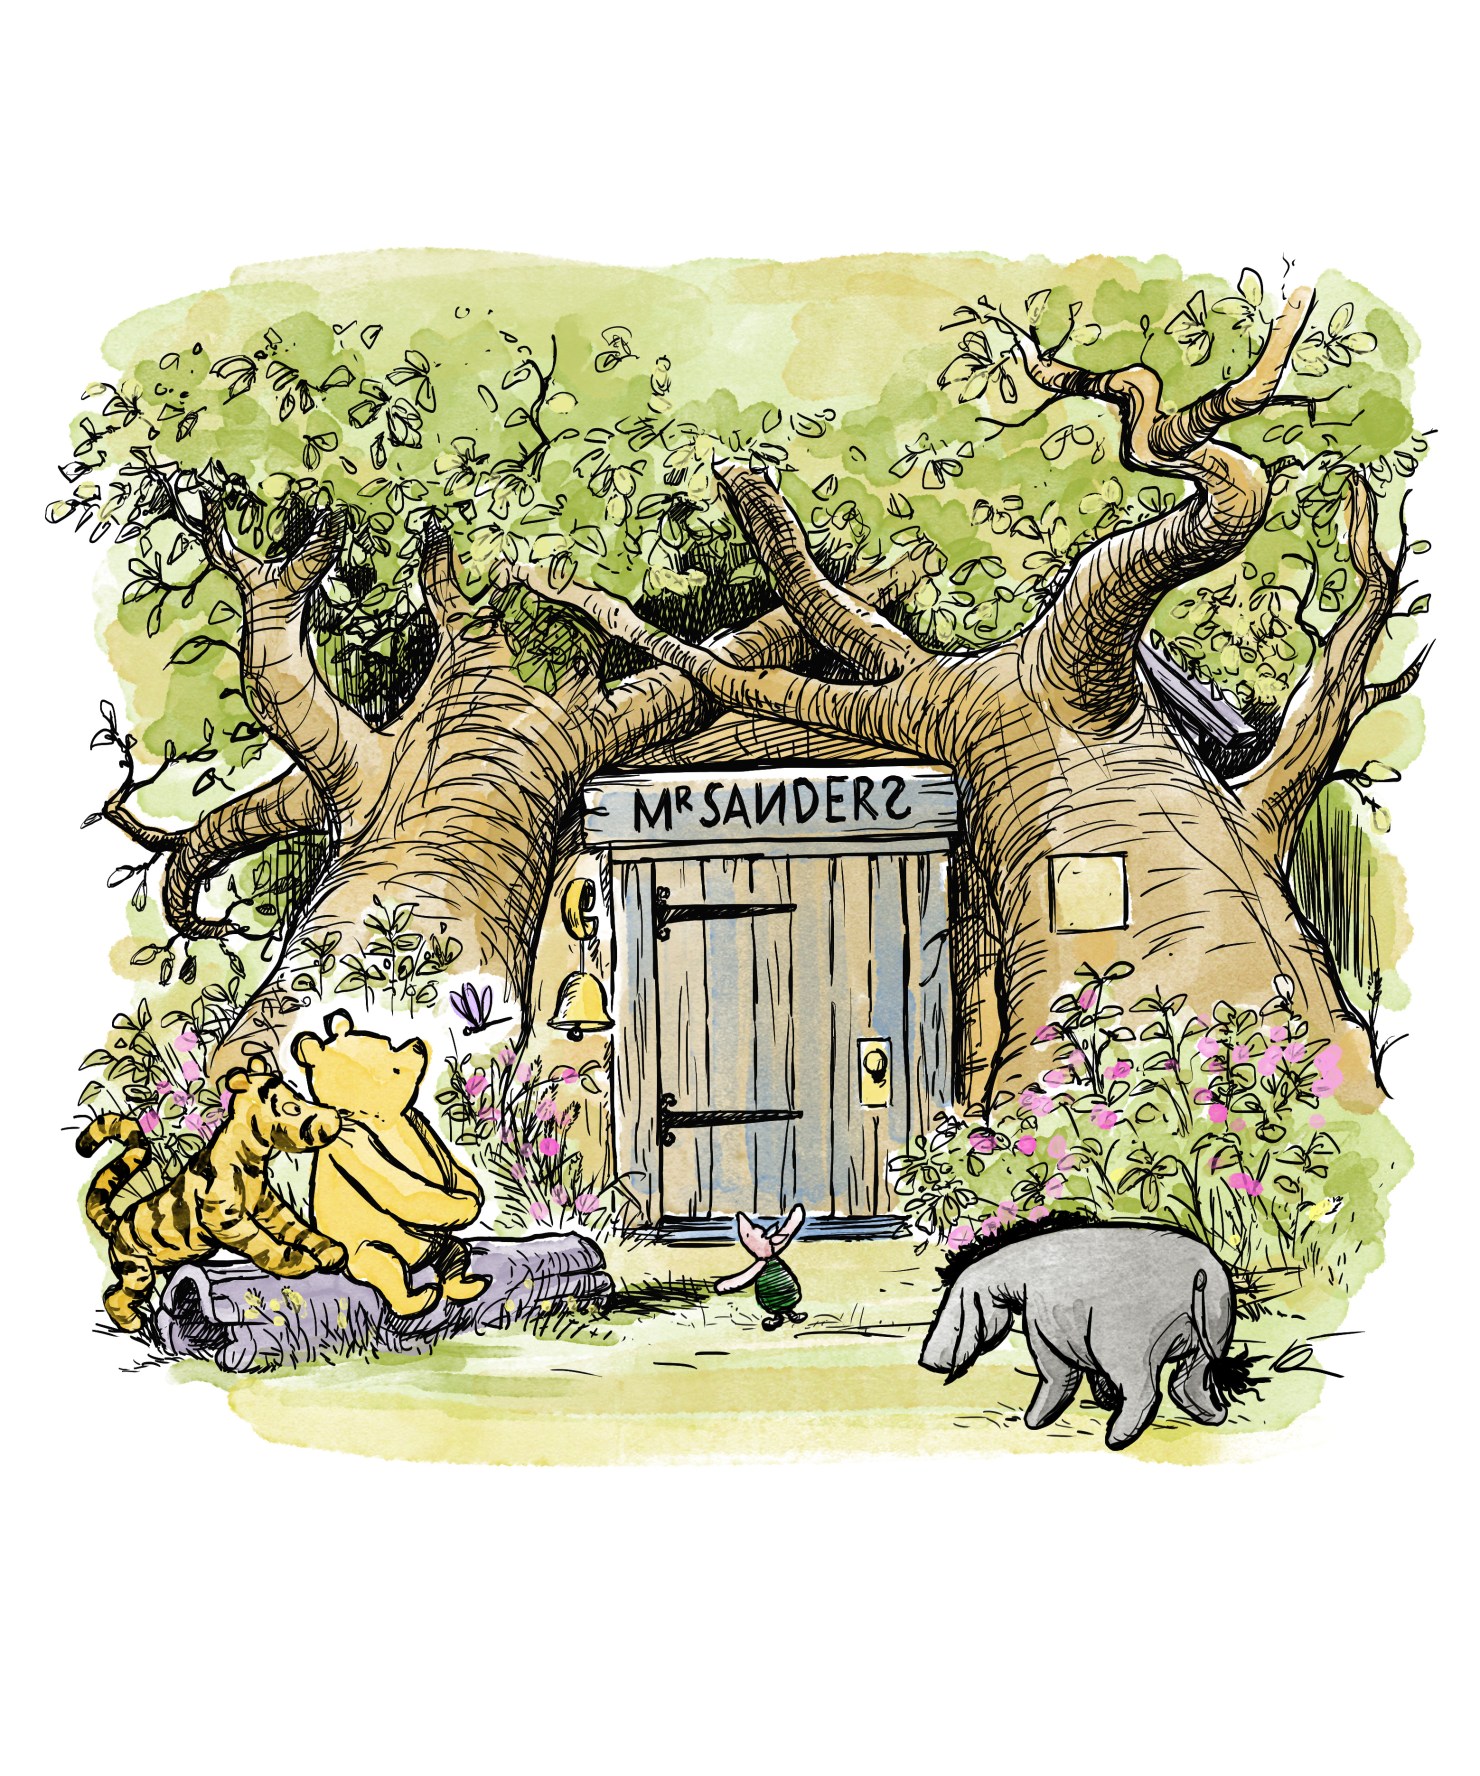 Winnie the Pooh illustrator, Kim Raymond's color illustration of the Winnie the Pooh house, including sketches of Pooh, Tigger, Piglet and Eeyore.